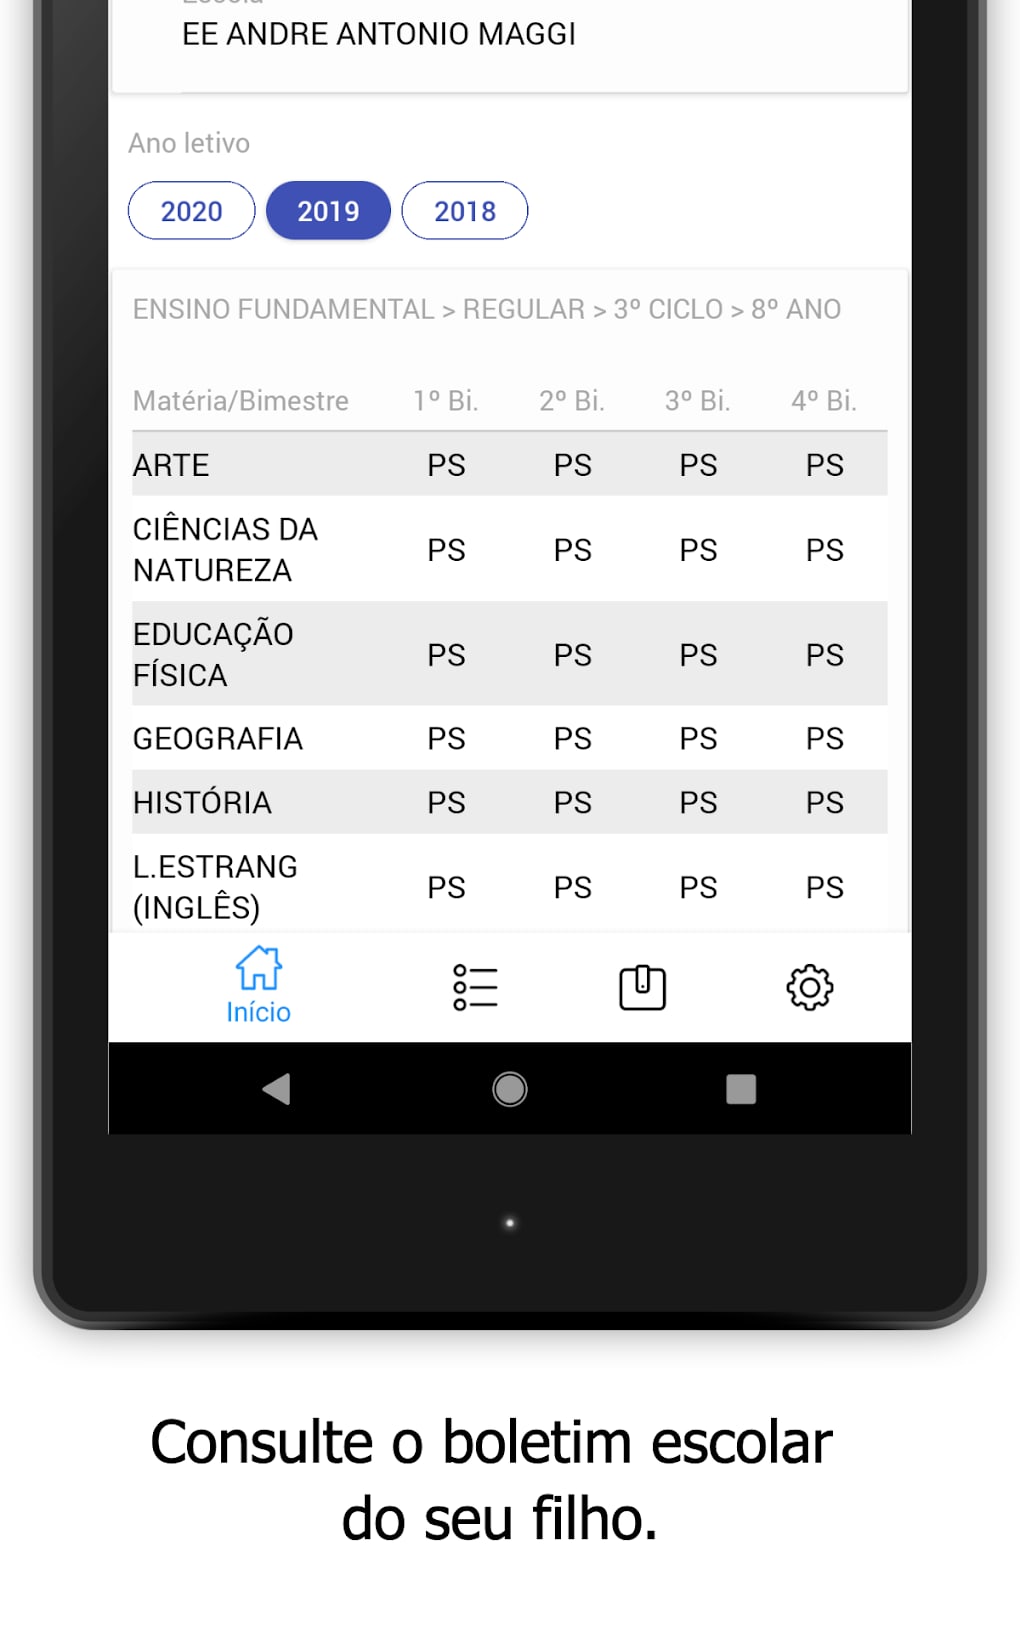 Download do APK de SMBOT para Android